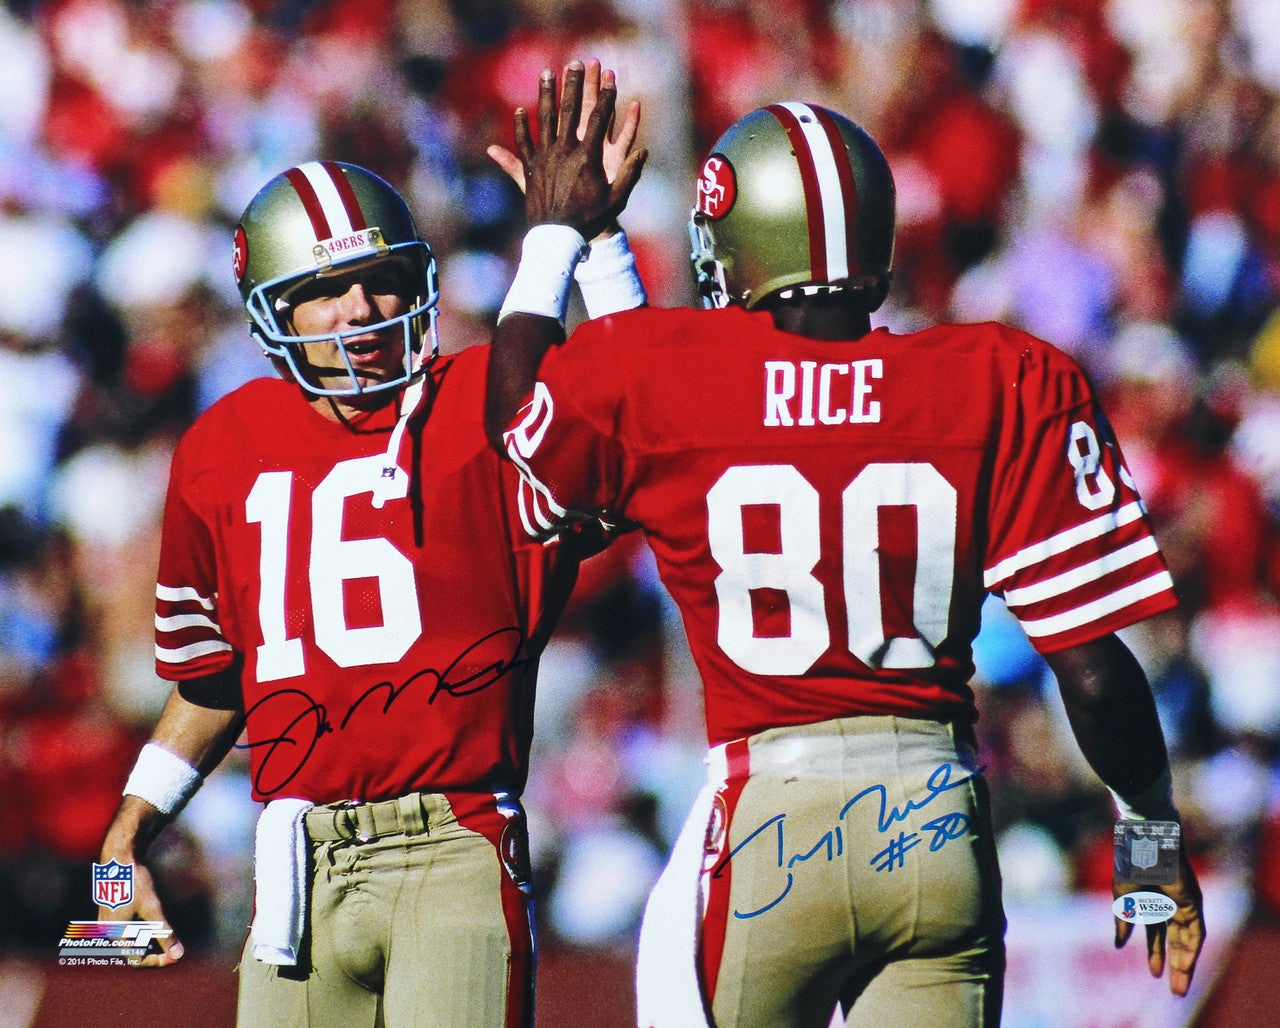 San Francisco 49ers Jerry Rice Nike Scarlet Iconic Legendary Vapor Limited Jersey